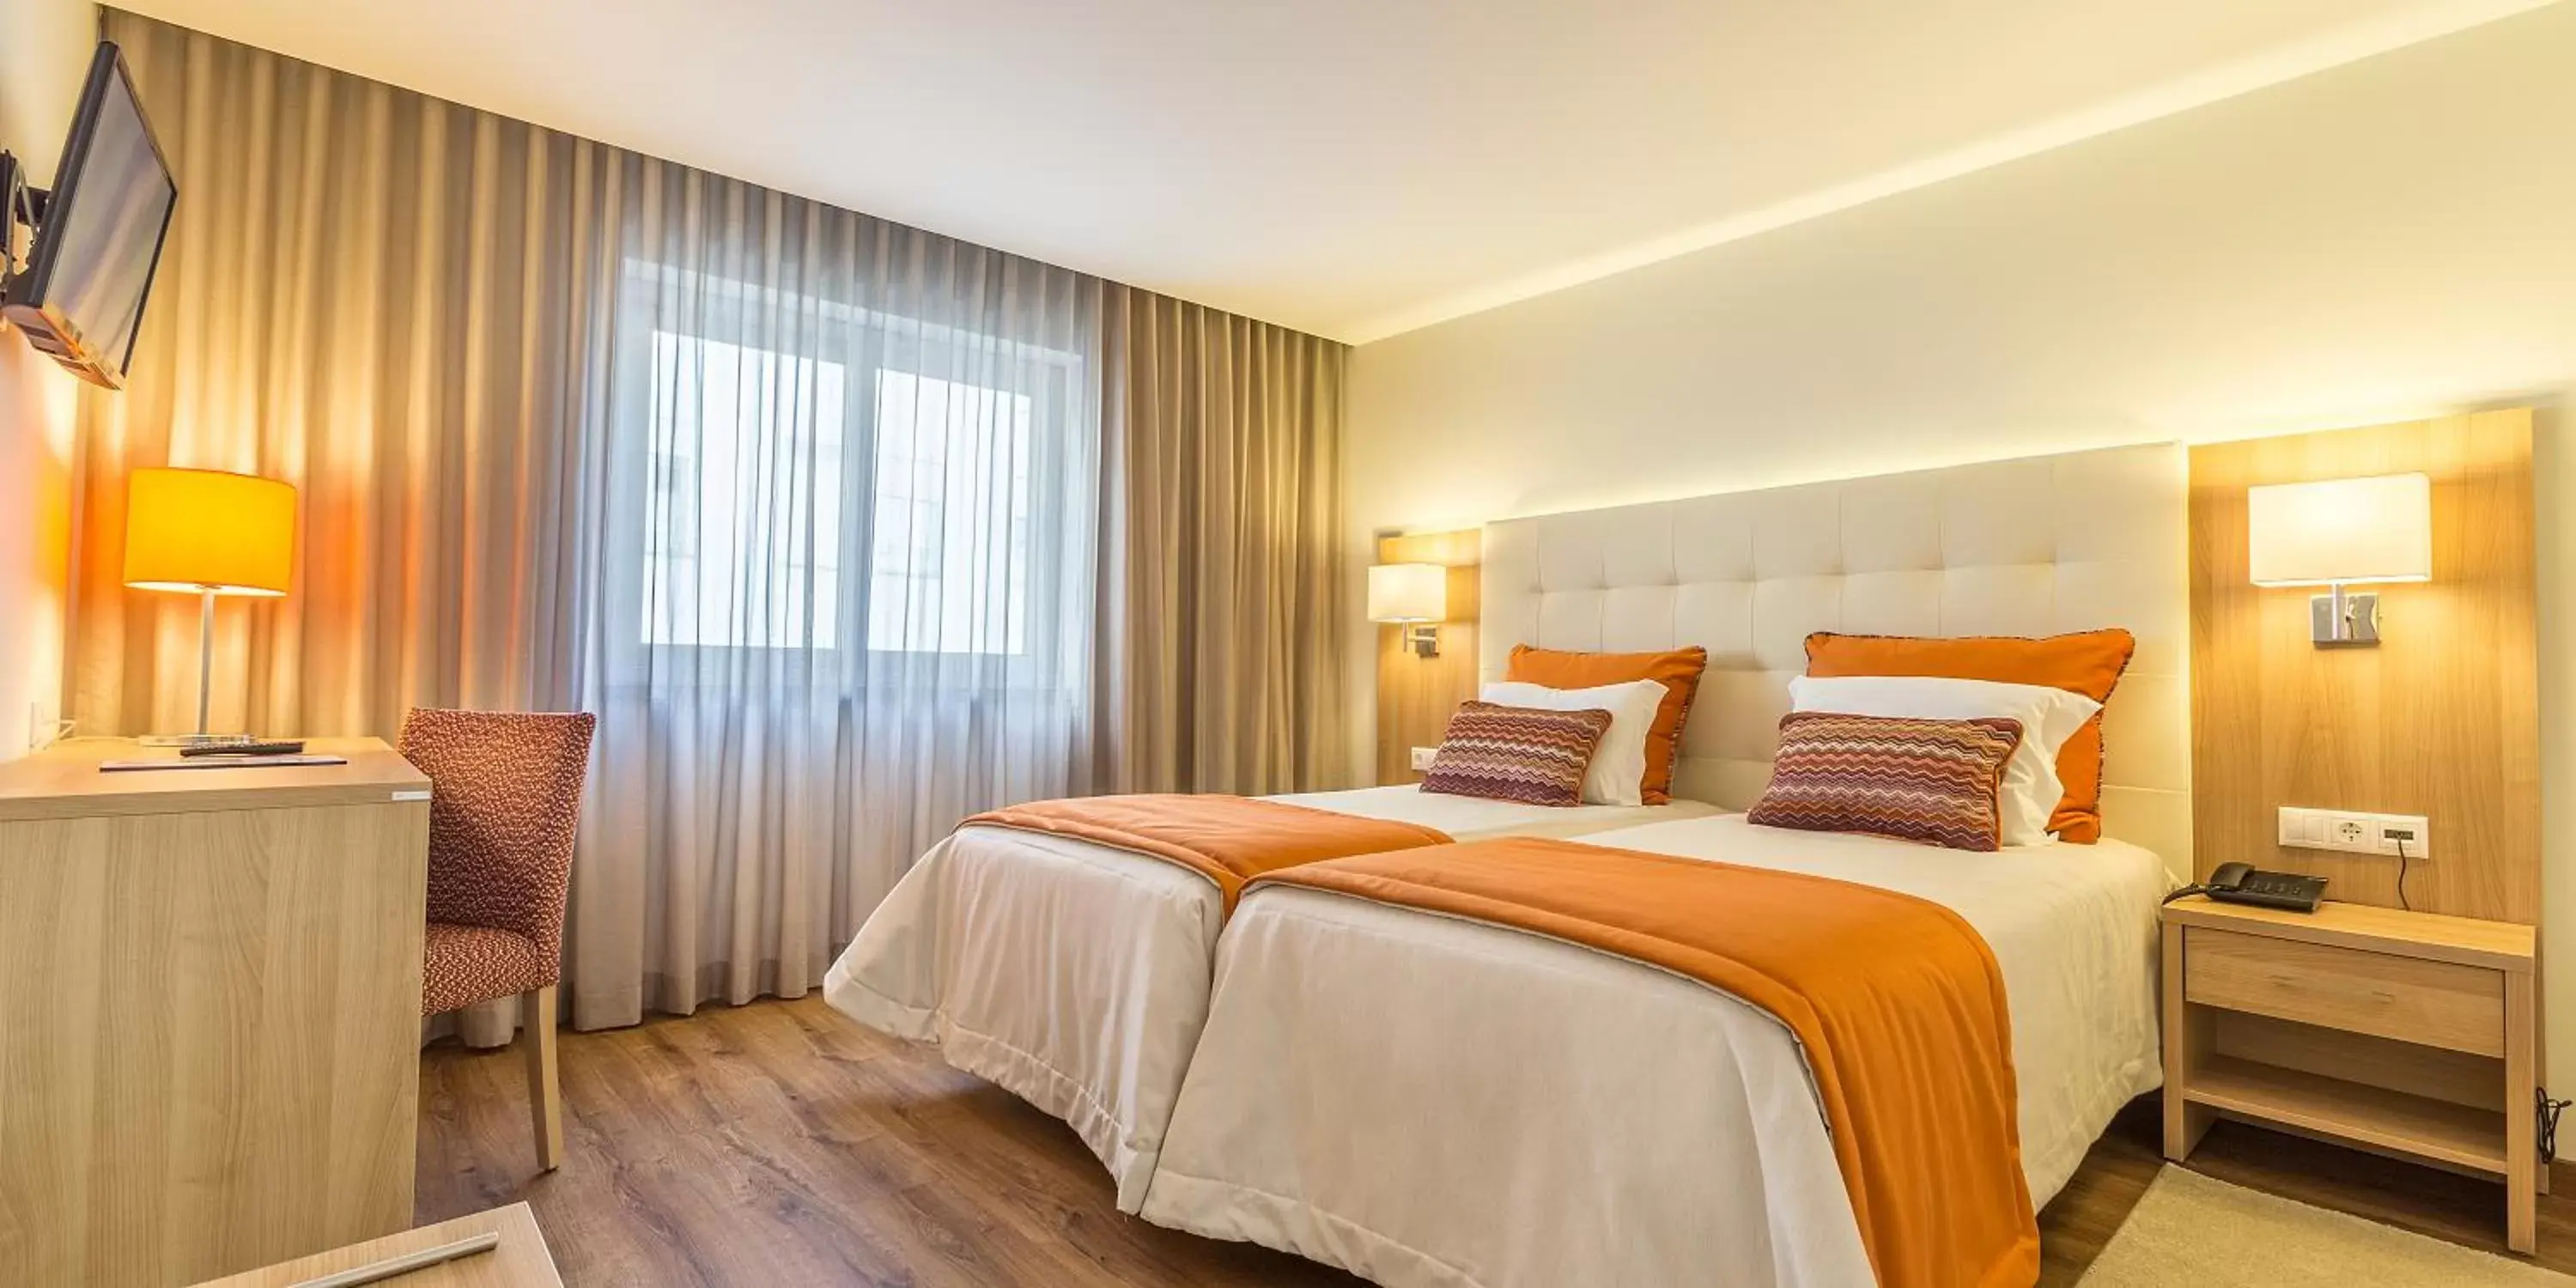 Bed, Room Photo in Hotel Fatima